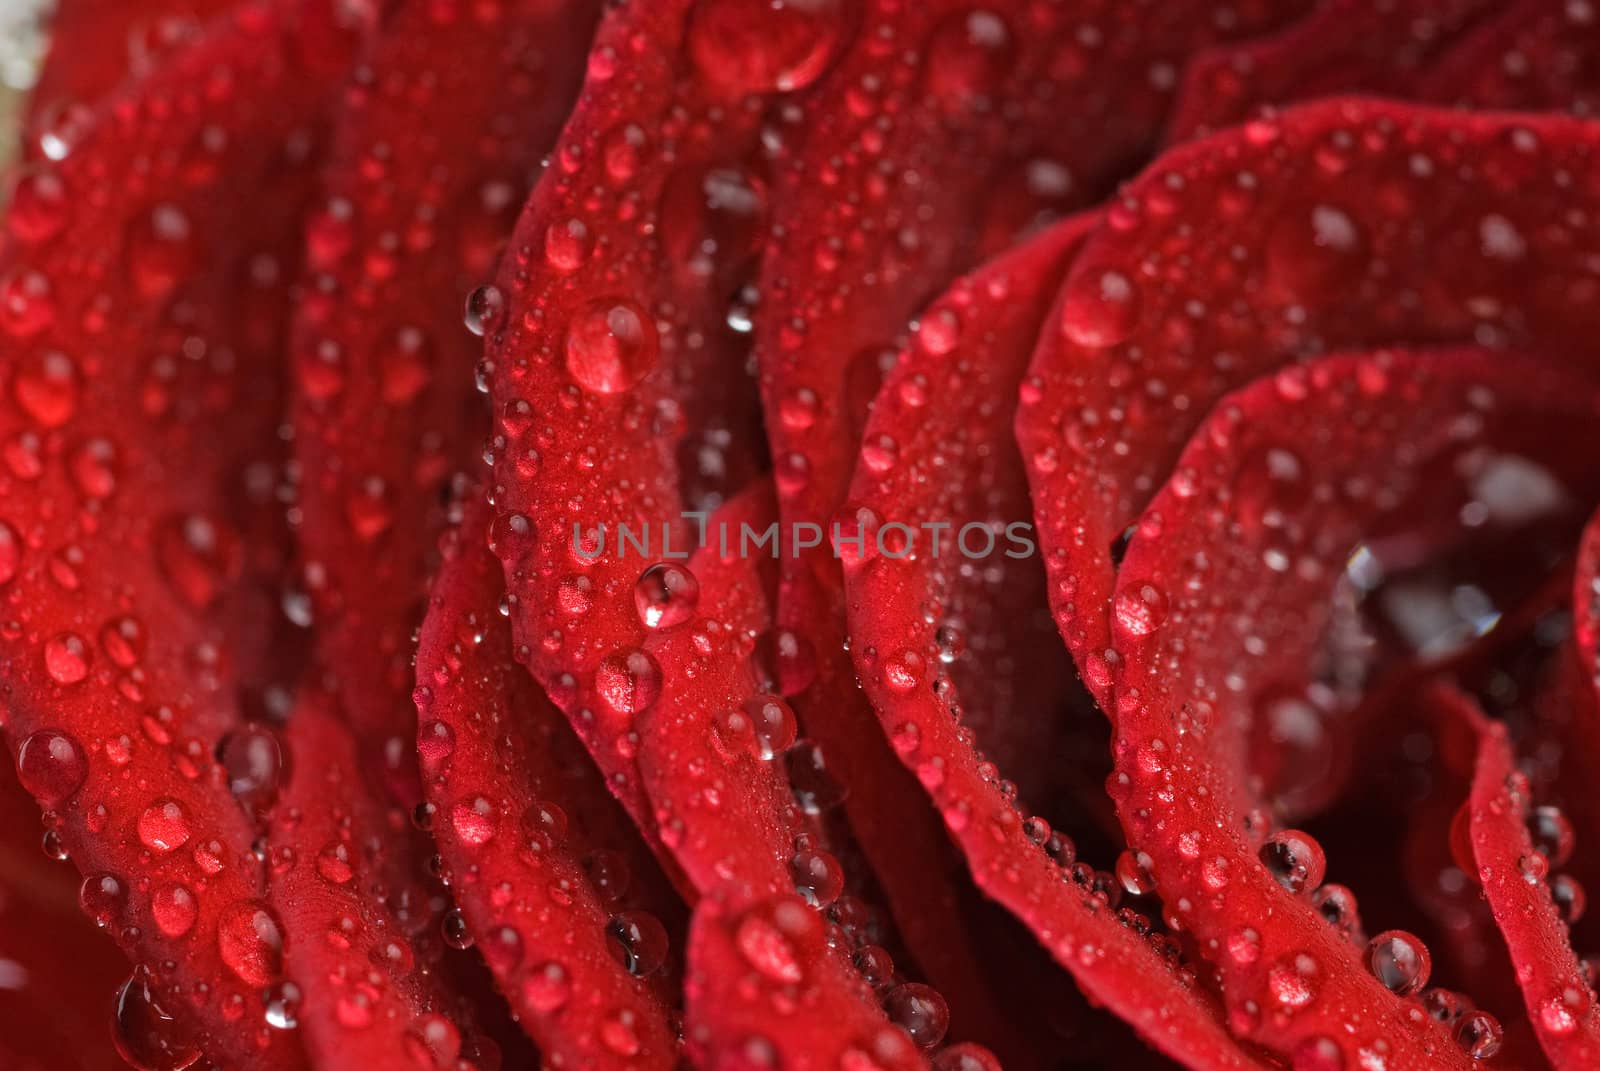 Rose leaves dewdrop by gorgev